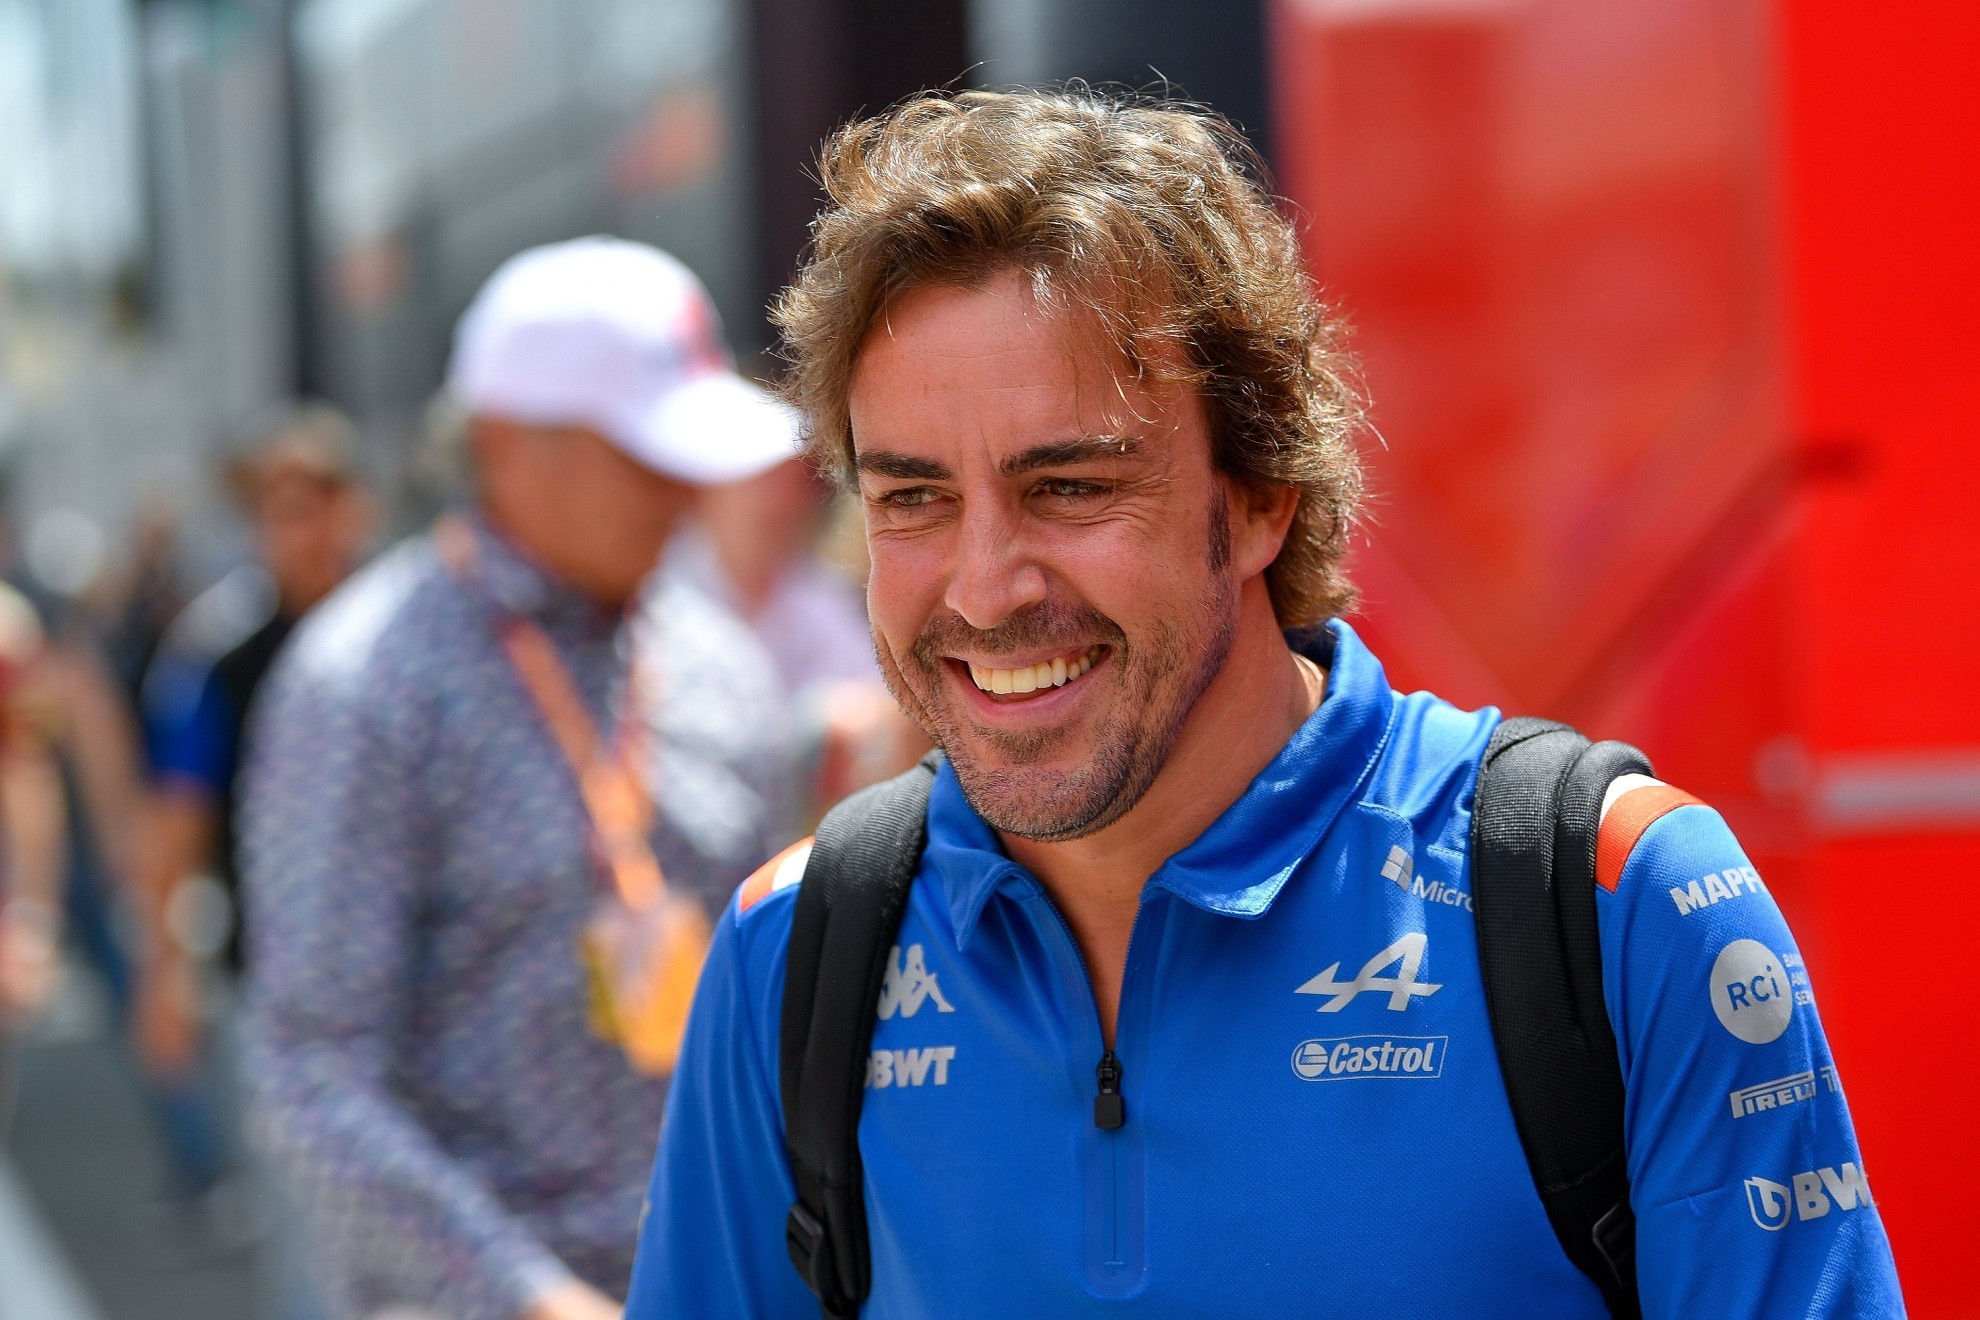 Fernando Alonso a su llegada al circuito este fin de semana. Zsolt Czegledi | EFE